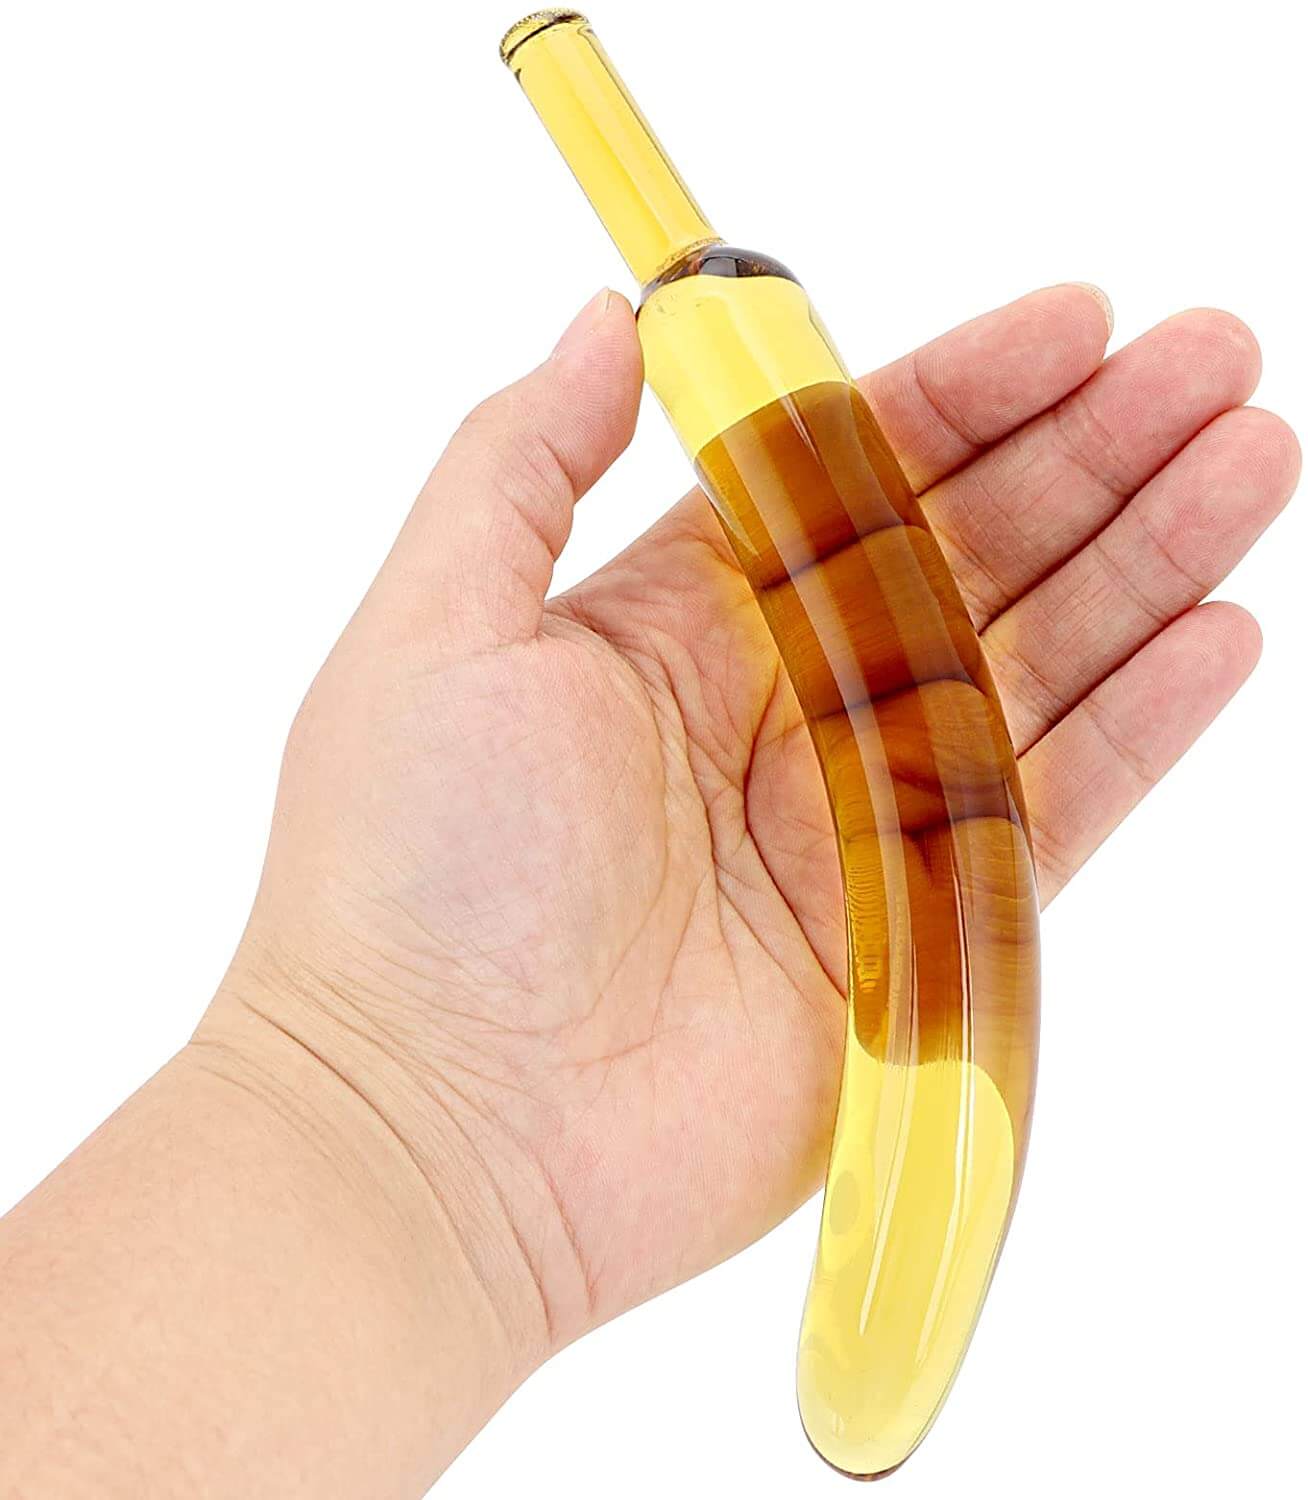 Glass-Dildo-For-Women-Masturbation-Sex-Toy-Fruit-Vegetable-Artificial-Penis-Anal-Plug-Sex-Toy